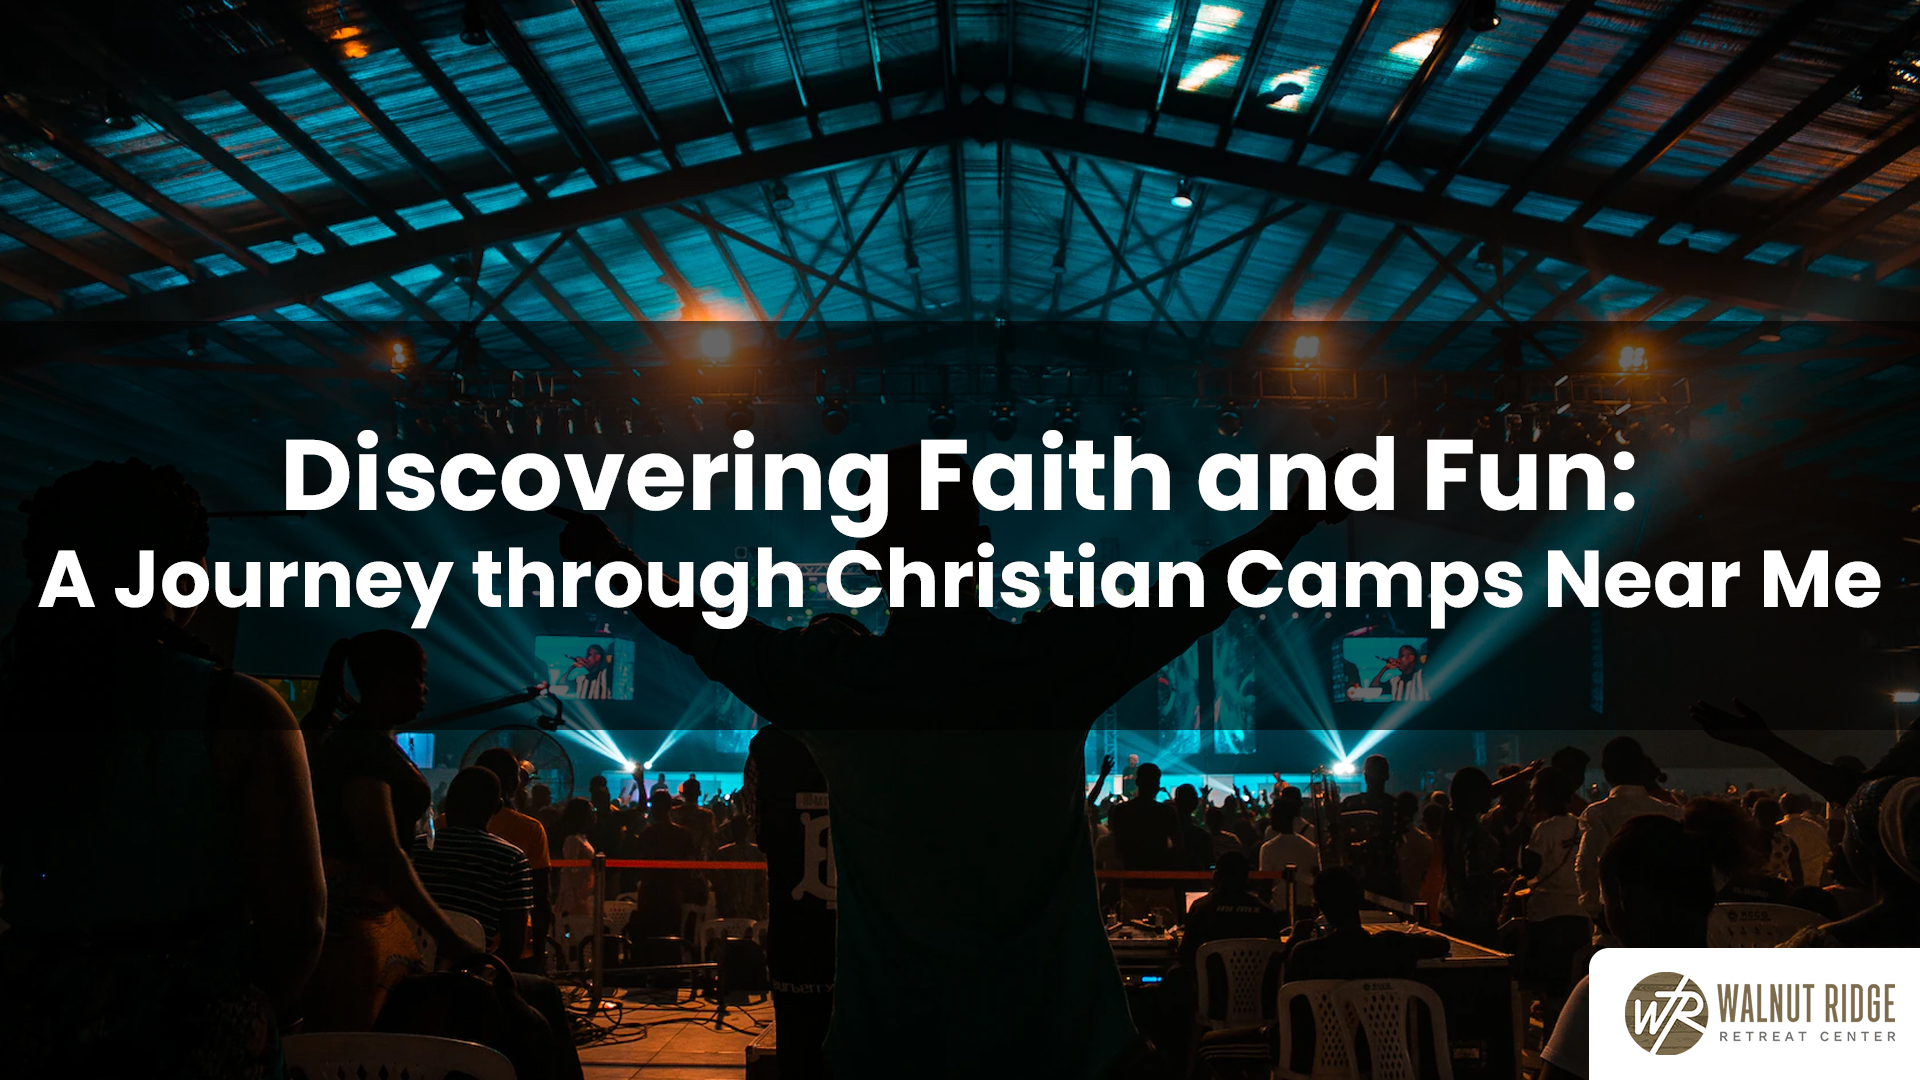 A Journey through Christian Camps Near Me